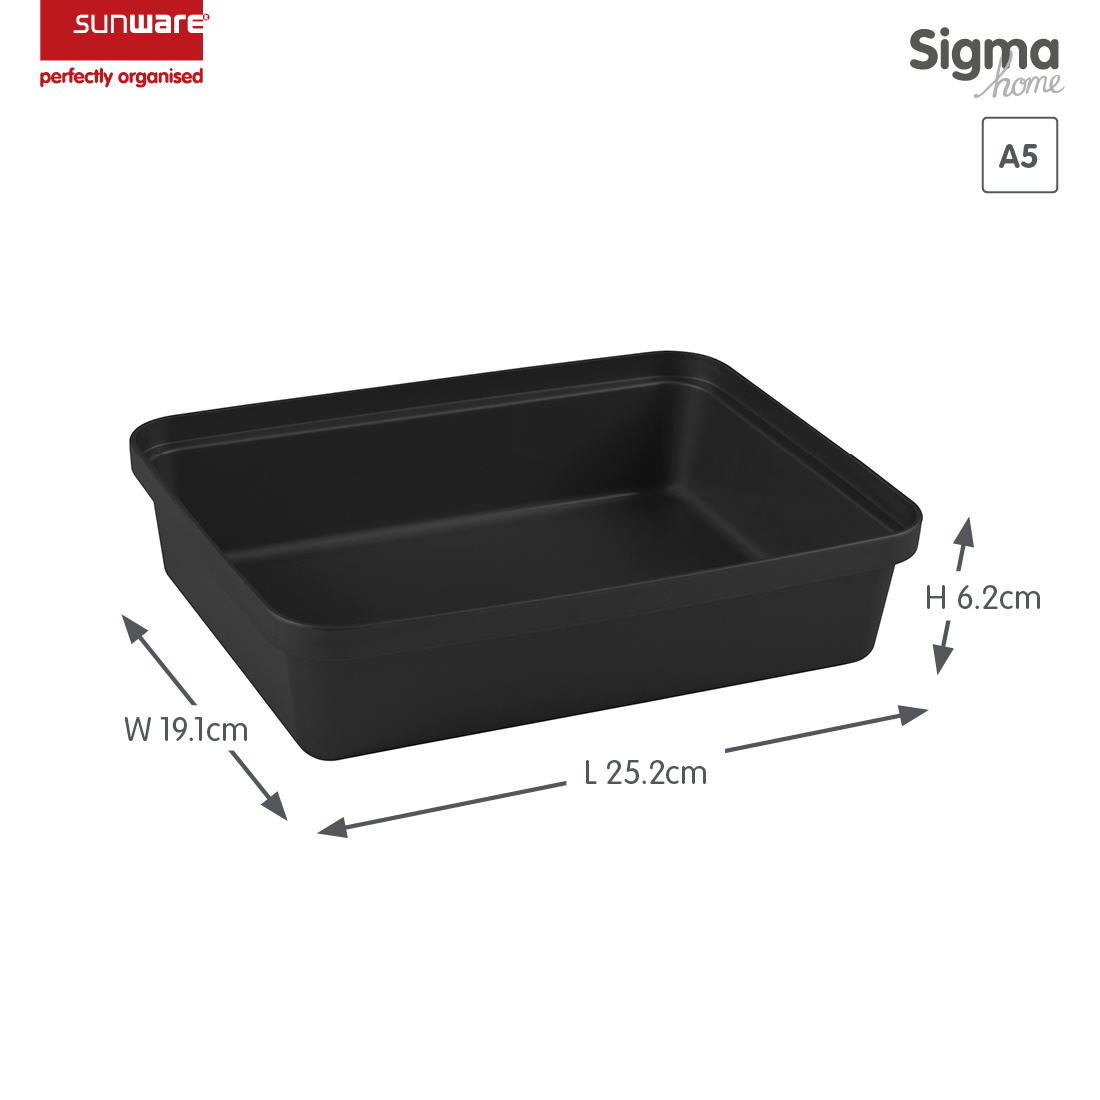  Sigma home vielzweckkorb A5 schwarz aus recyceltem Material 